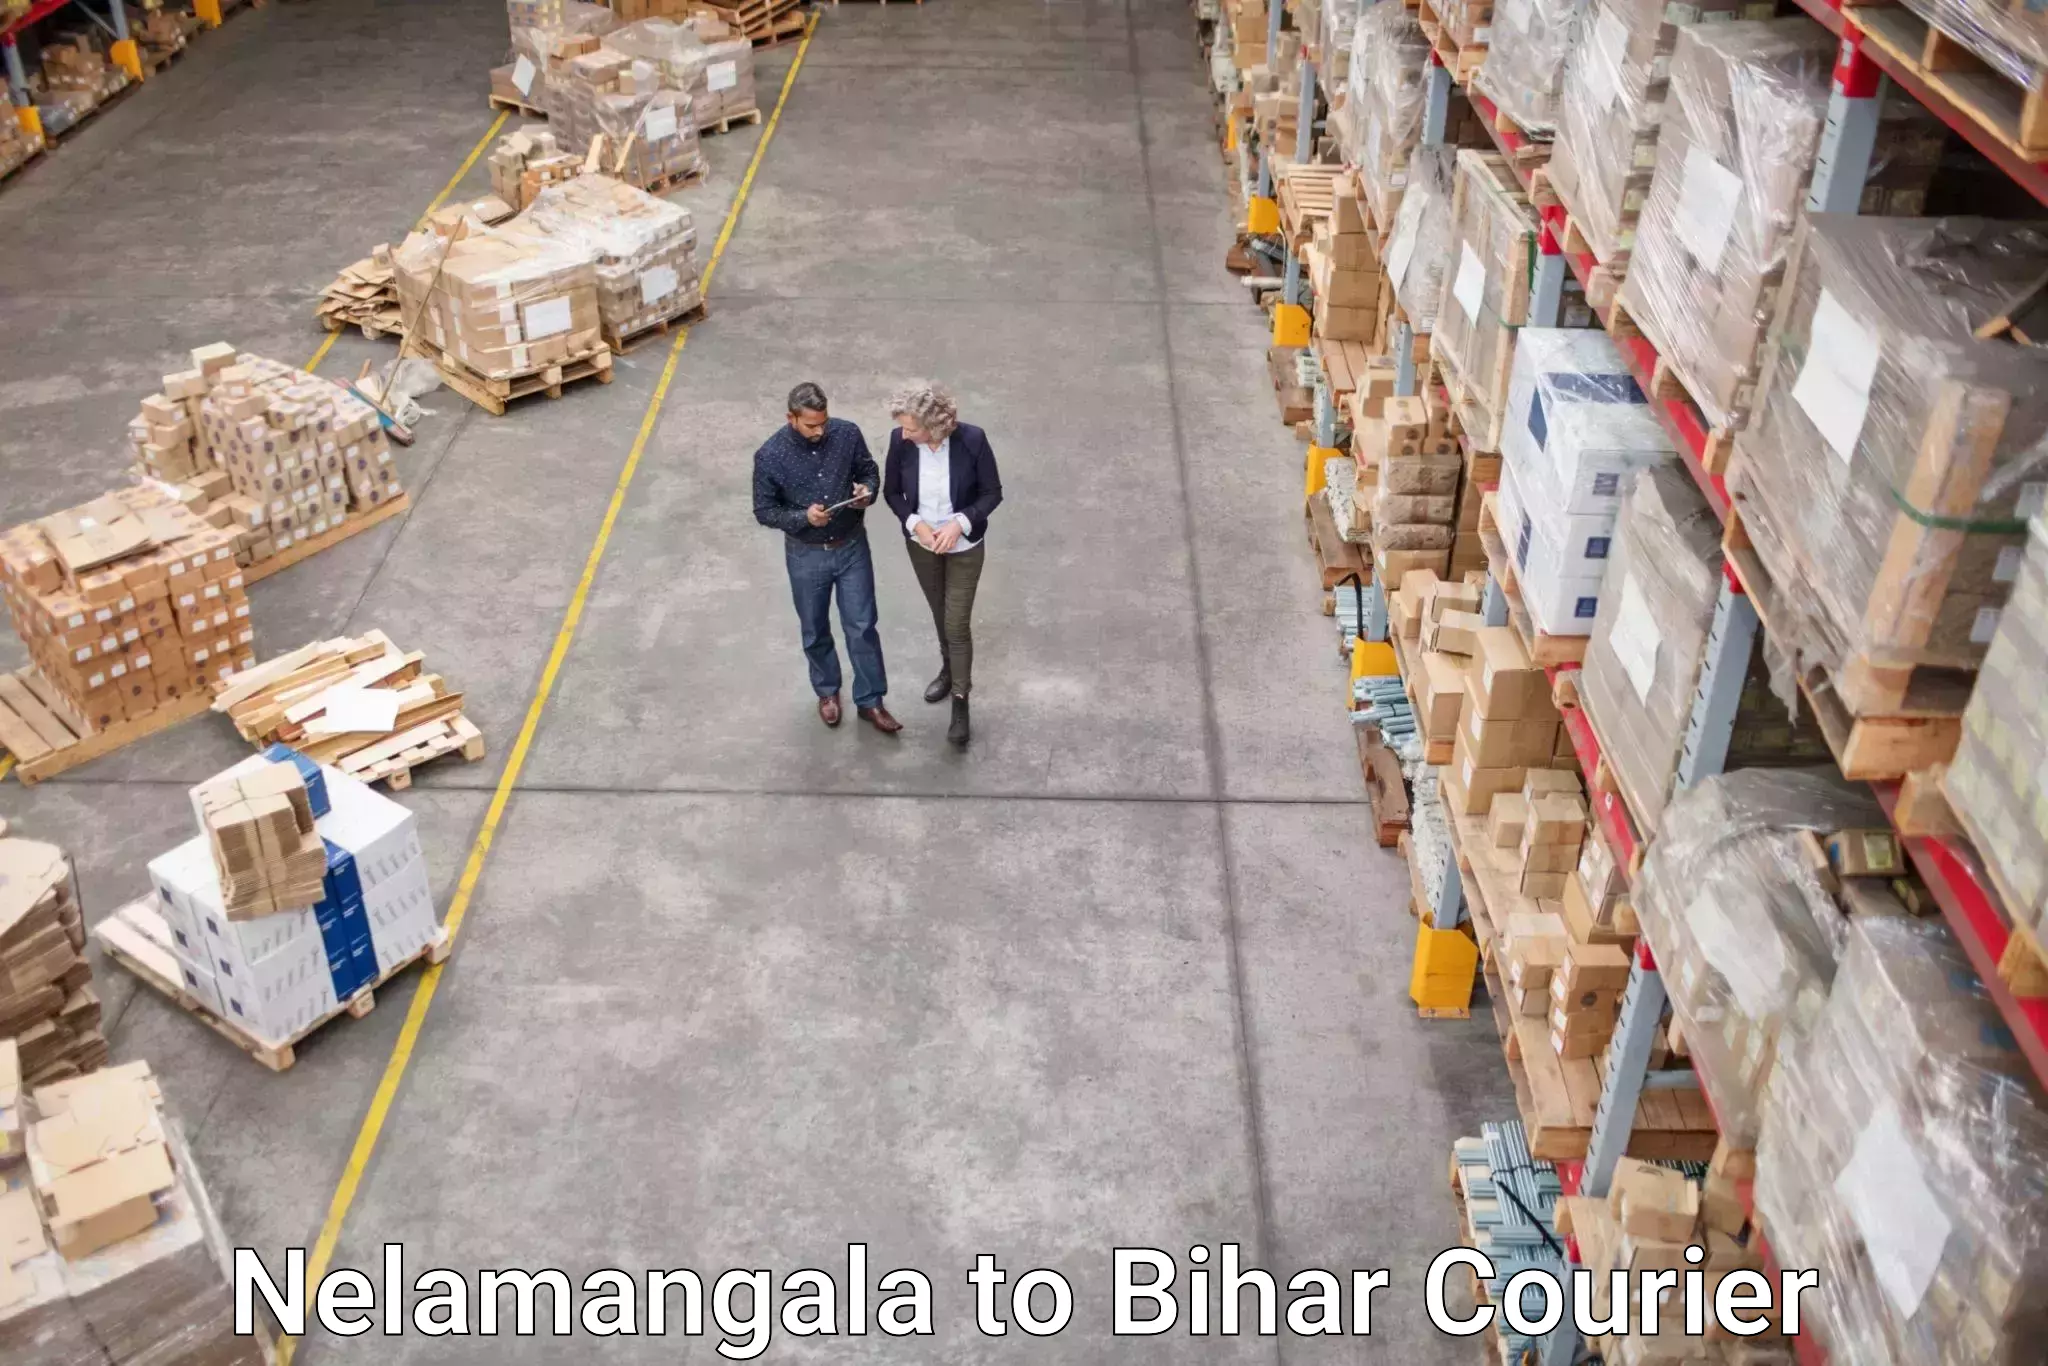 Quality courier partnerships Nelamangala to Biraul